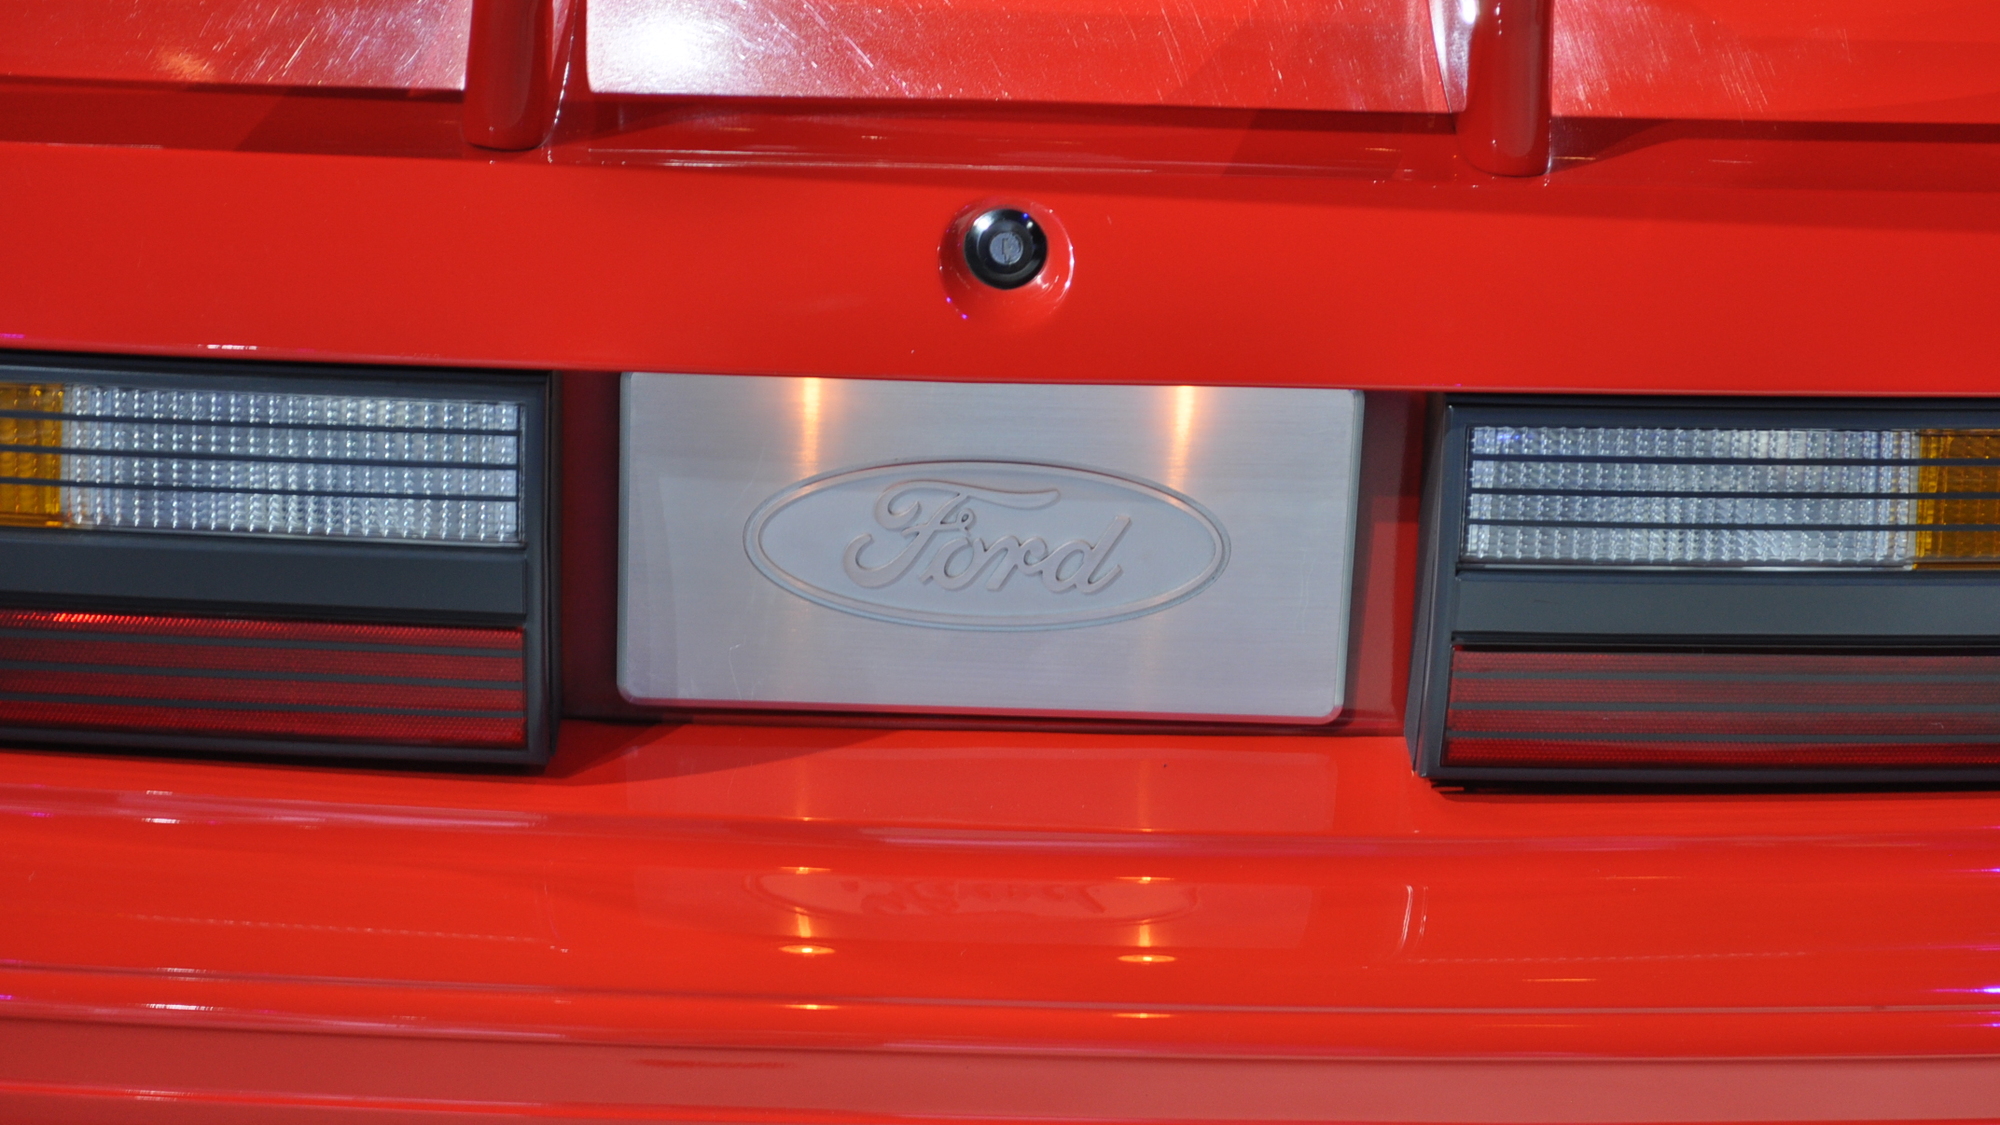 1993 Ford Mustang Cobra R